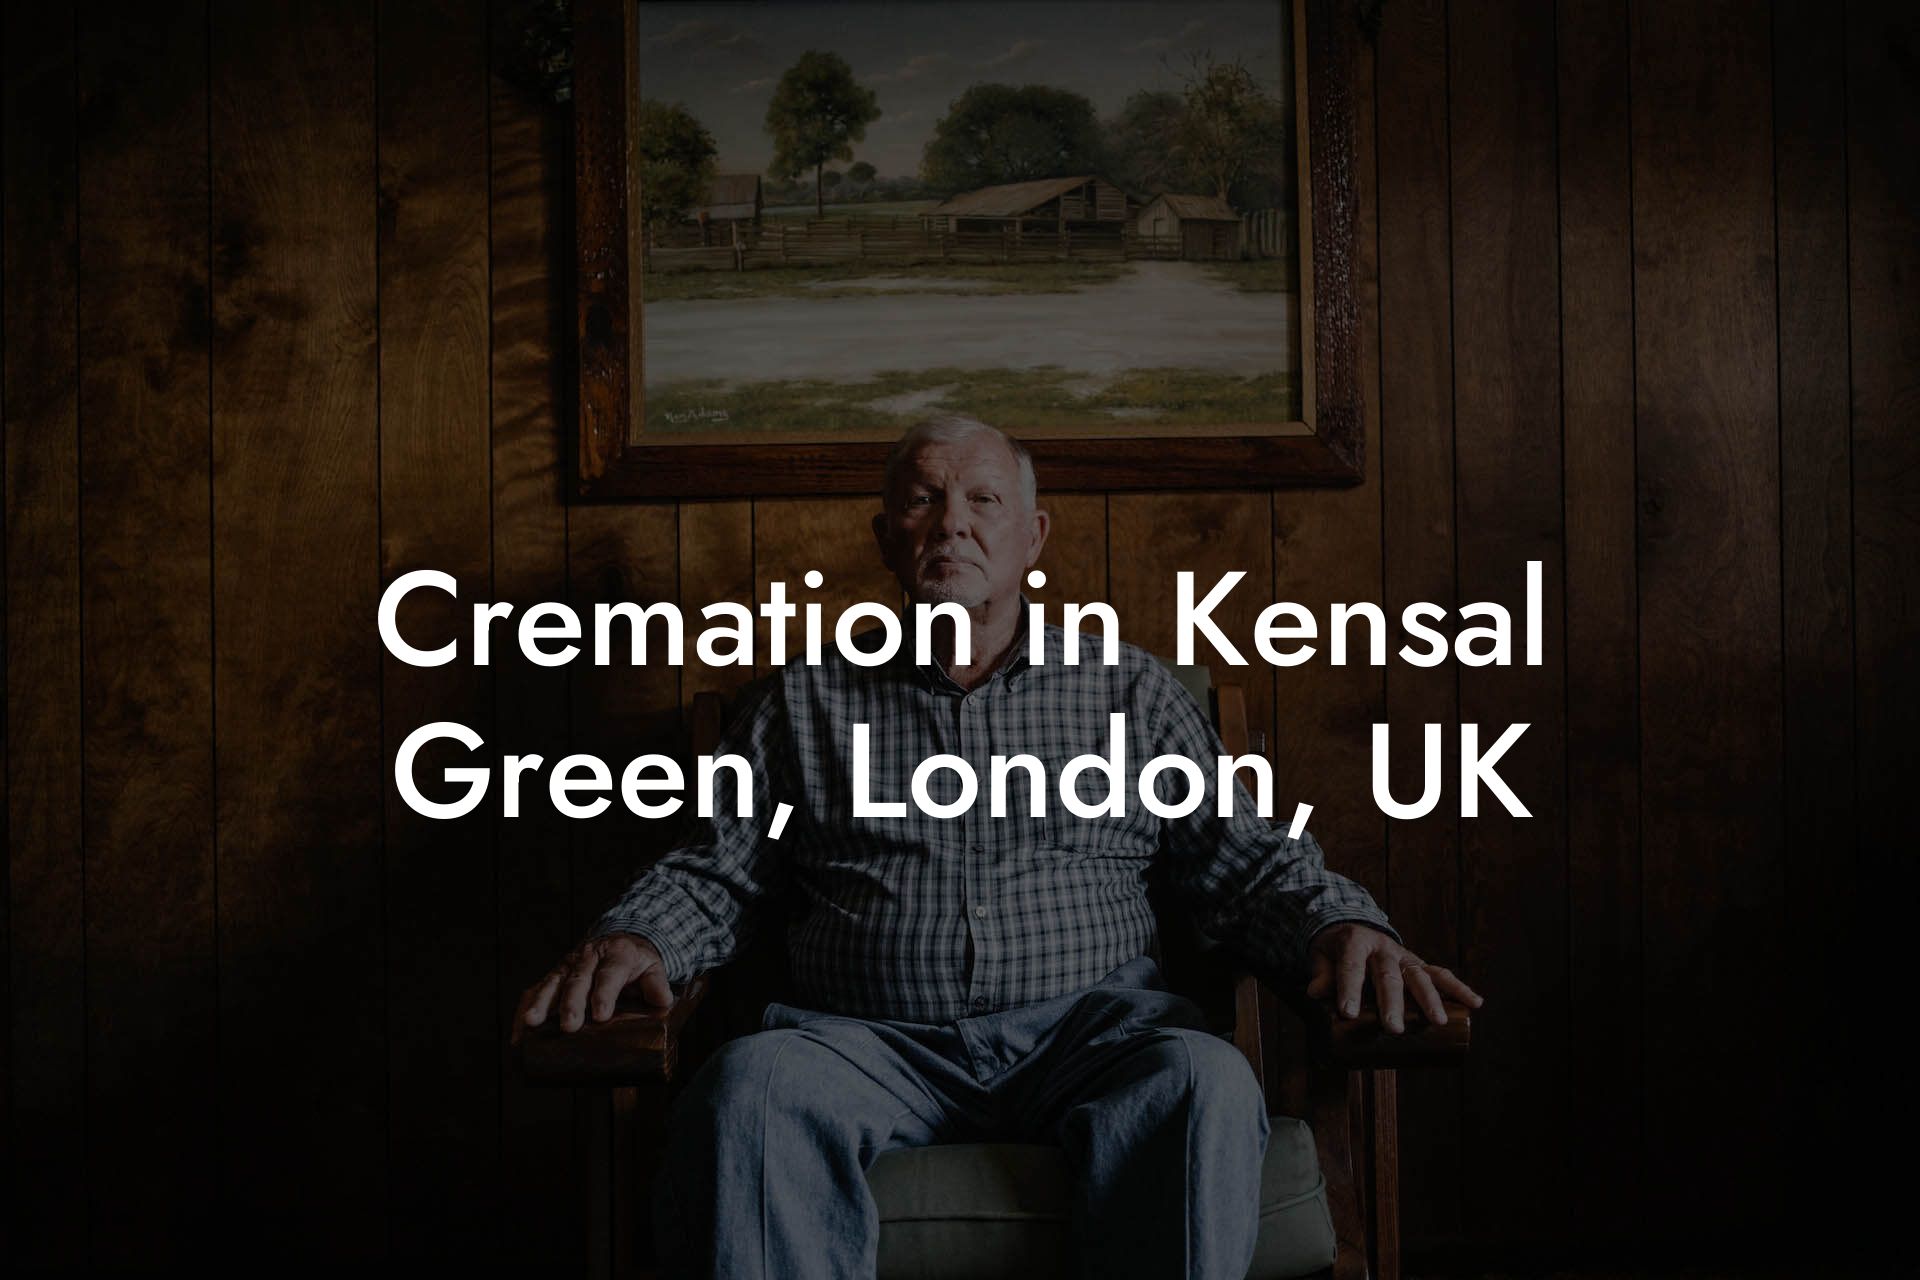 Cremation in Kensal Green, London, UK